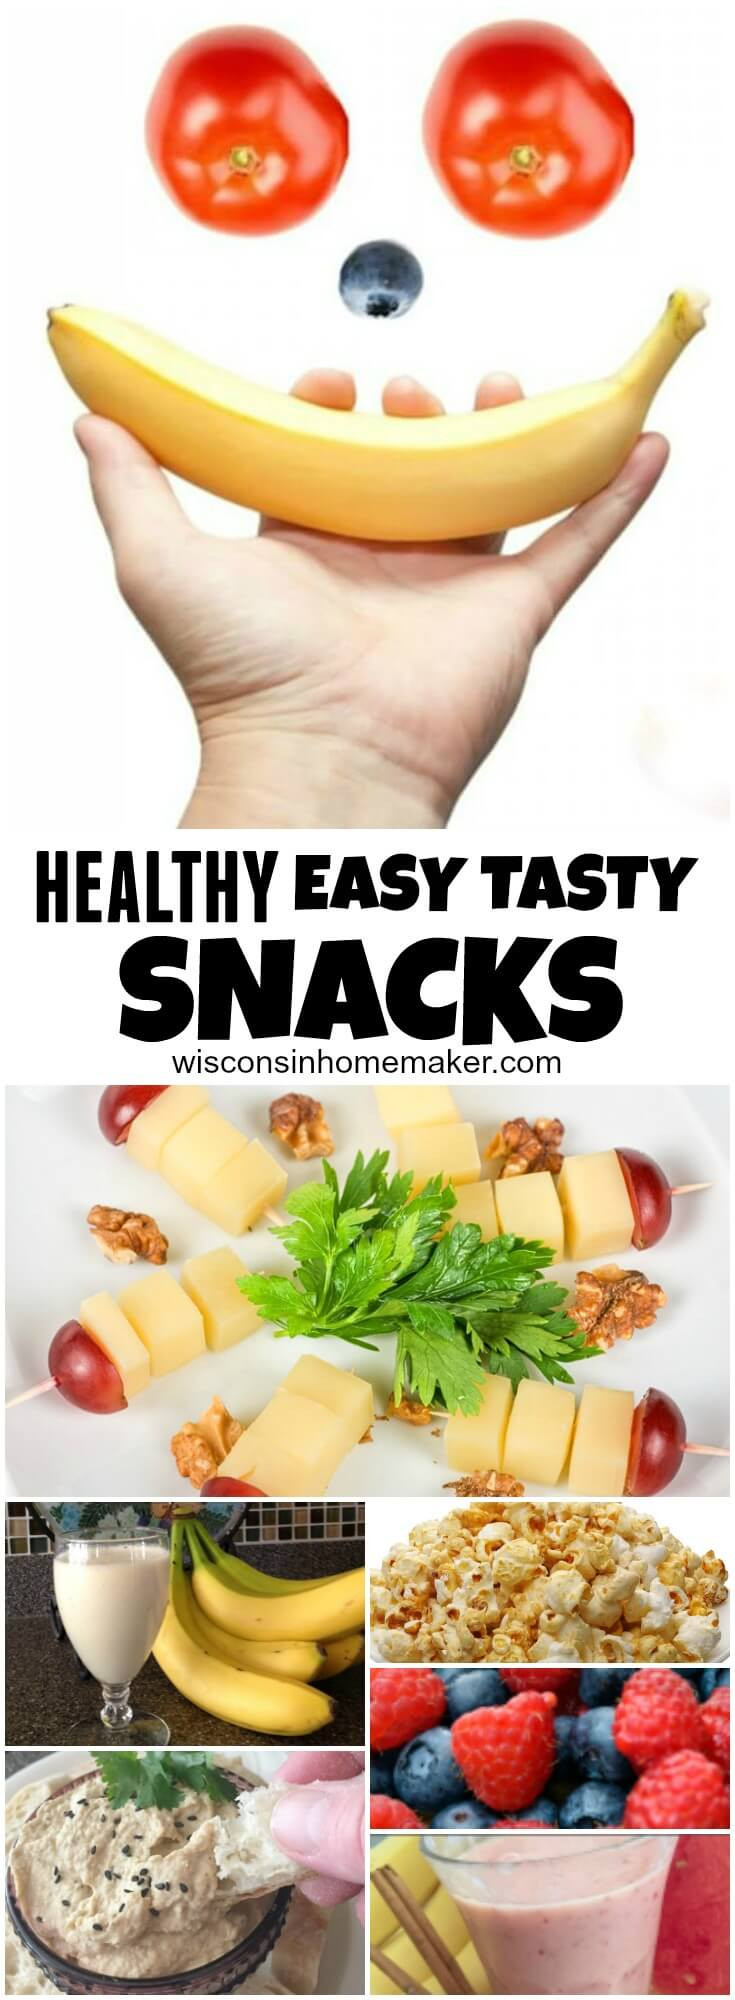 Tasty Healthy Snacks
 Healthy but Easy Tasty Snacks Recipes